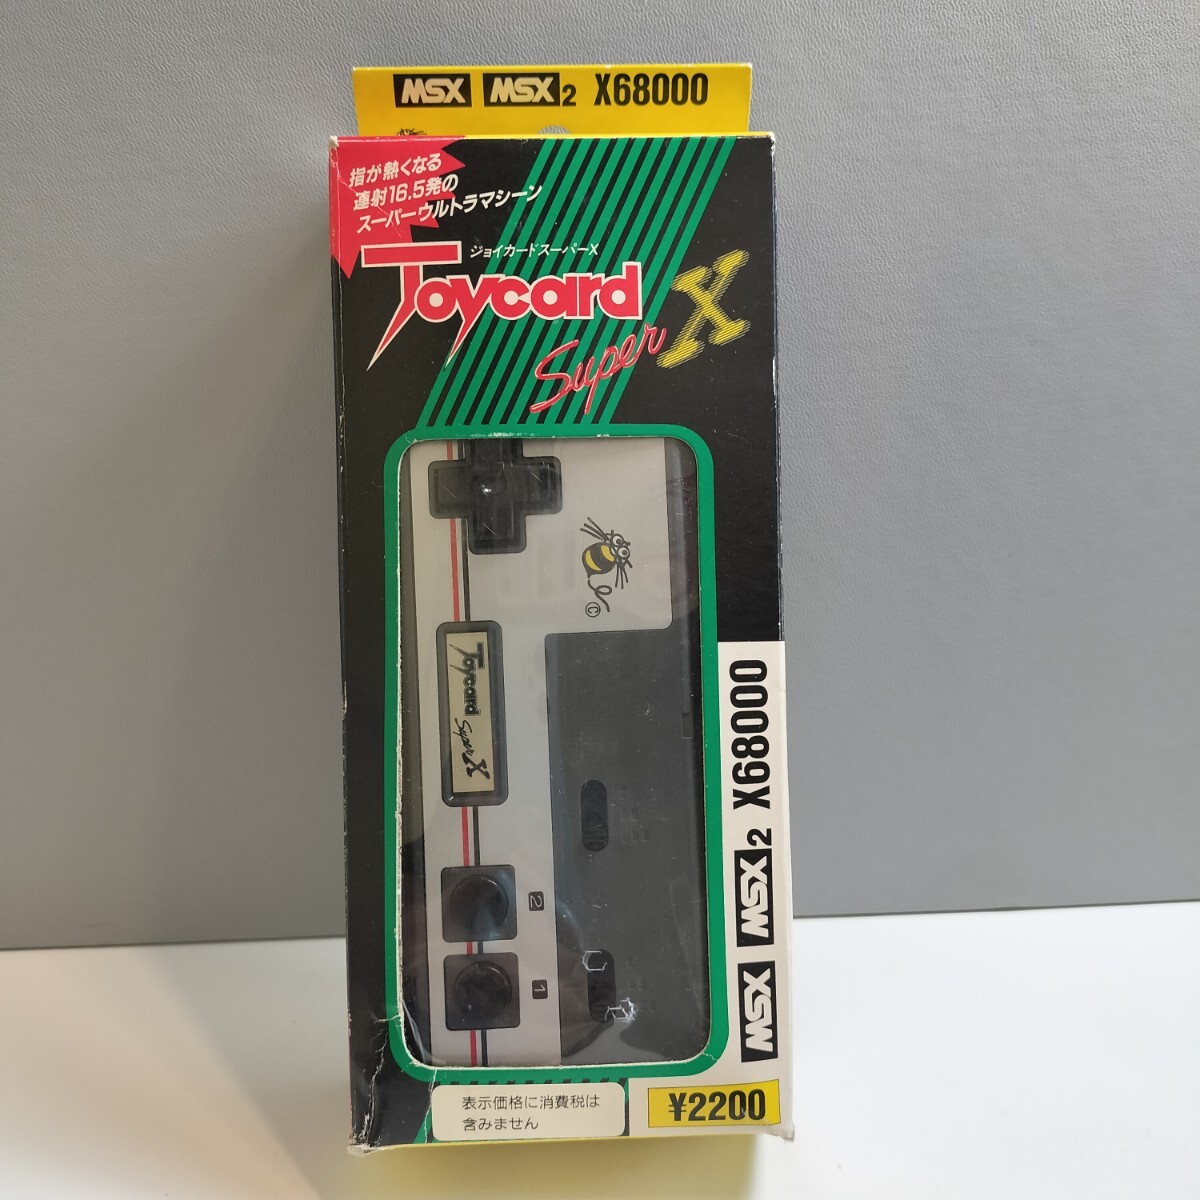 HUDSON SOFT Joycard SuperX ハドソン ジョイカード MSX MSX2 X68000 コントローラの画像1